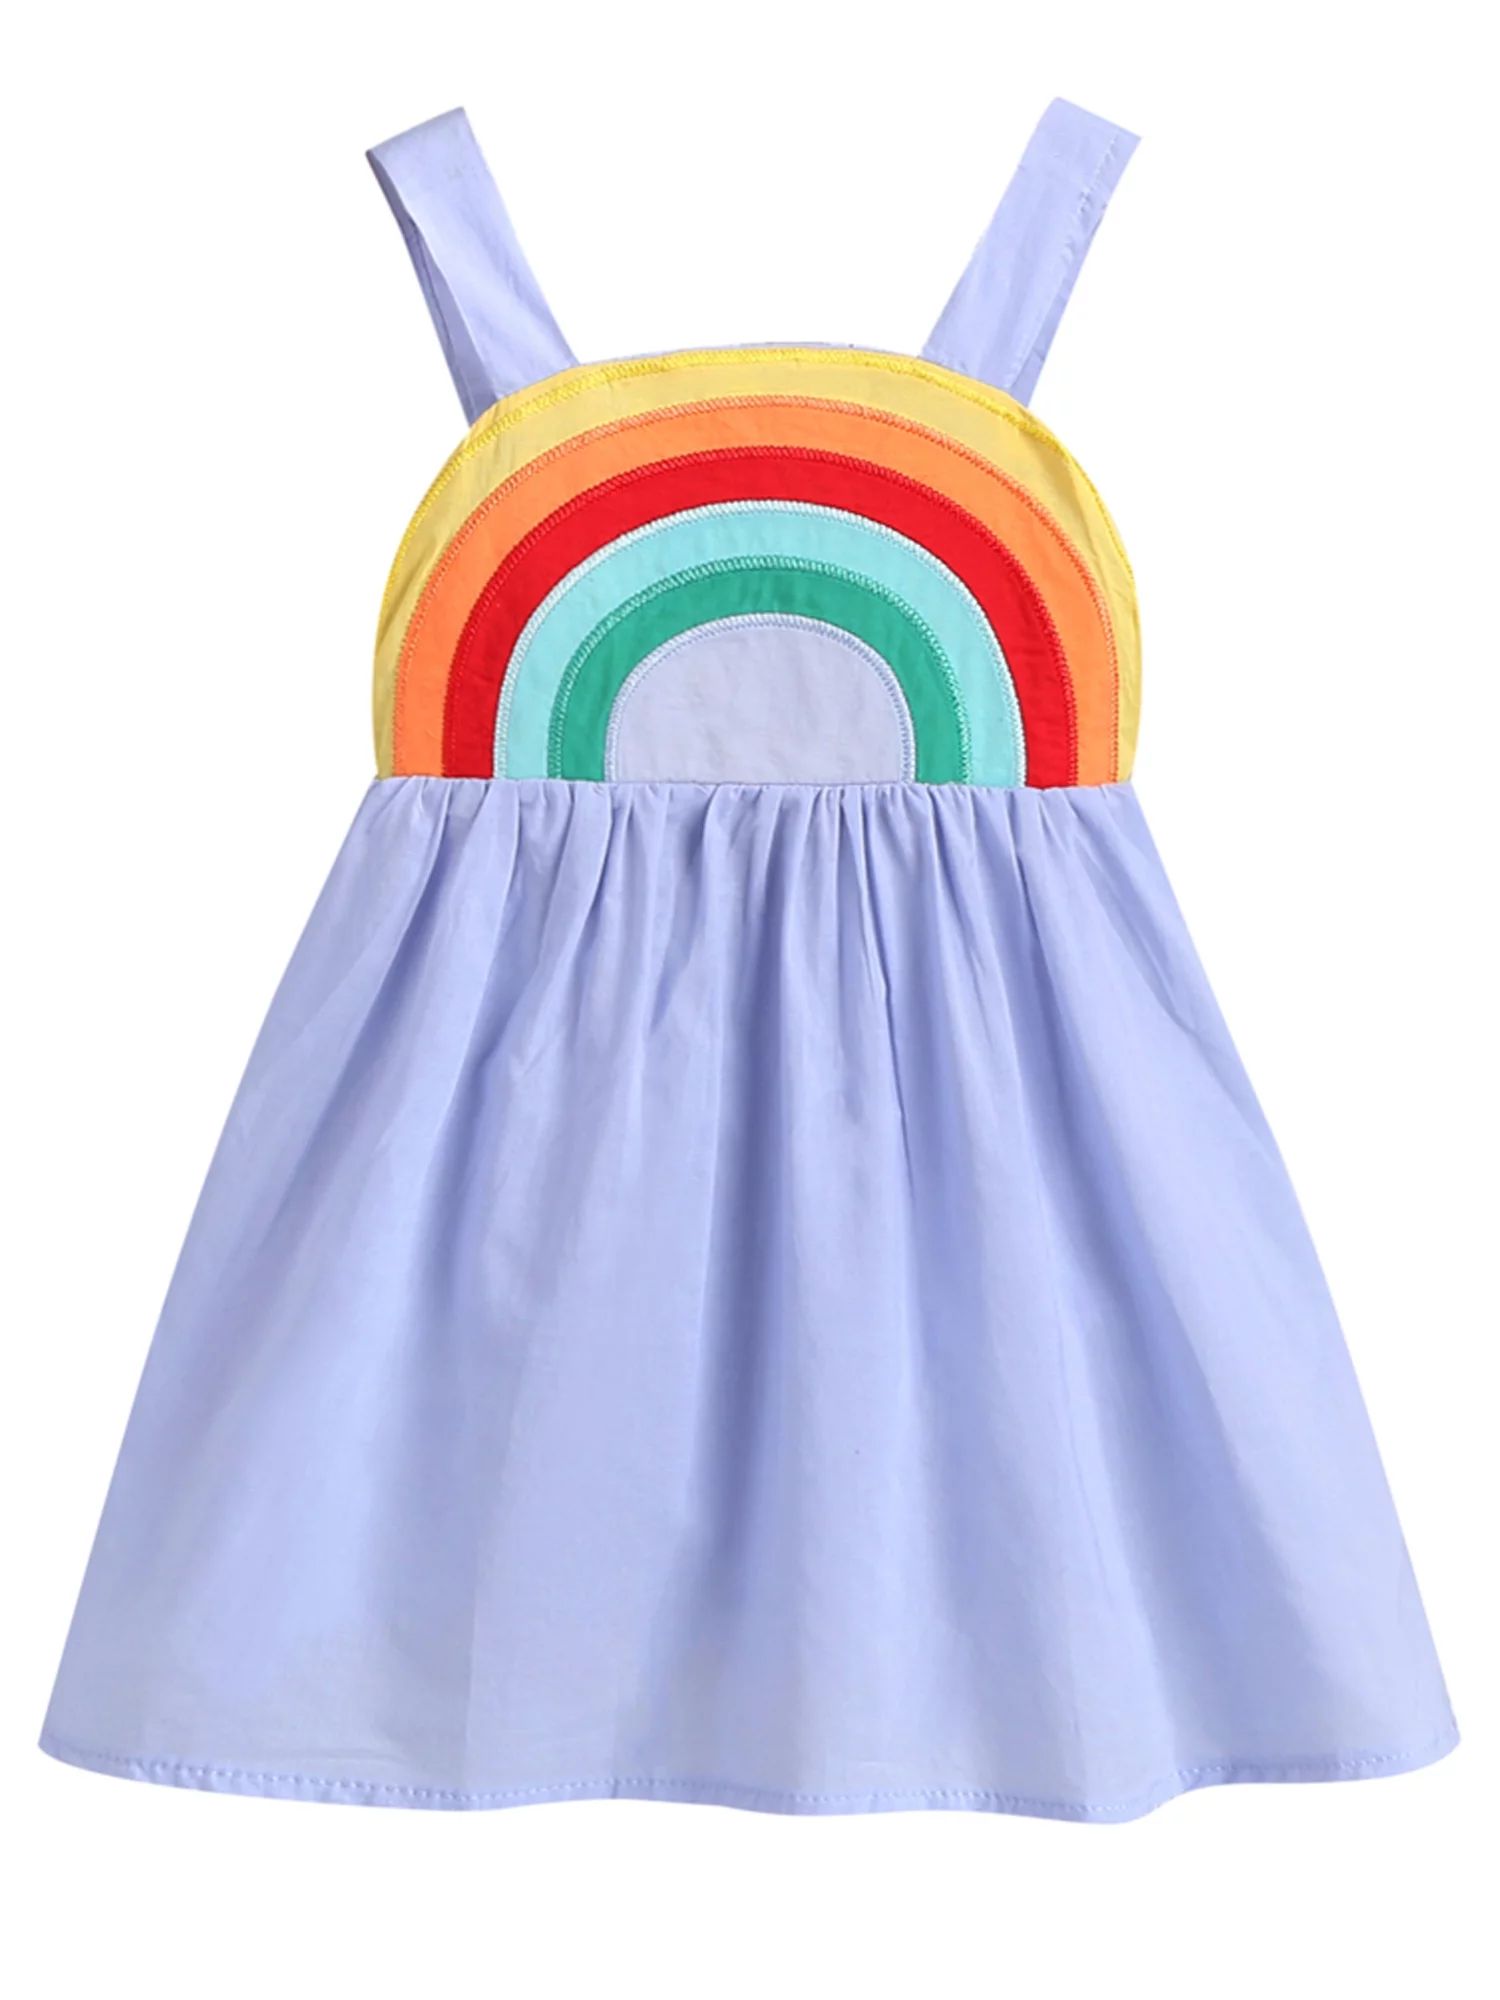 Dewadbow Toddler Kids Baby Girls Clothes Sleeveless Rainbow Dress Sundress | Walmart (US)